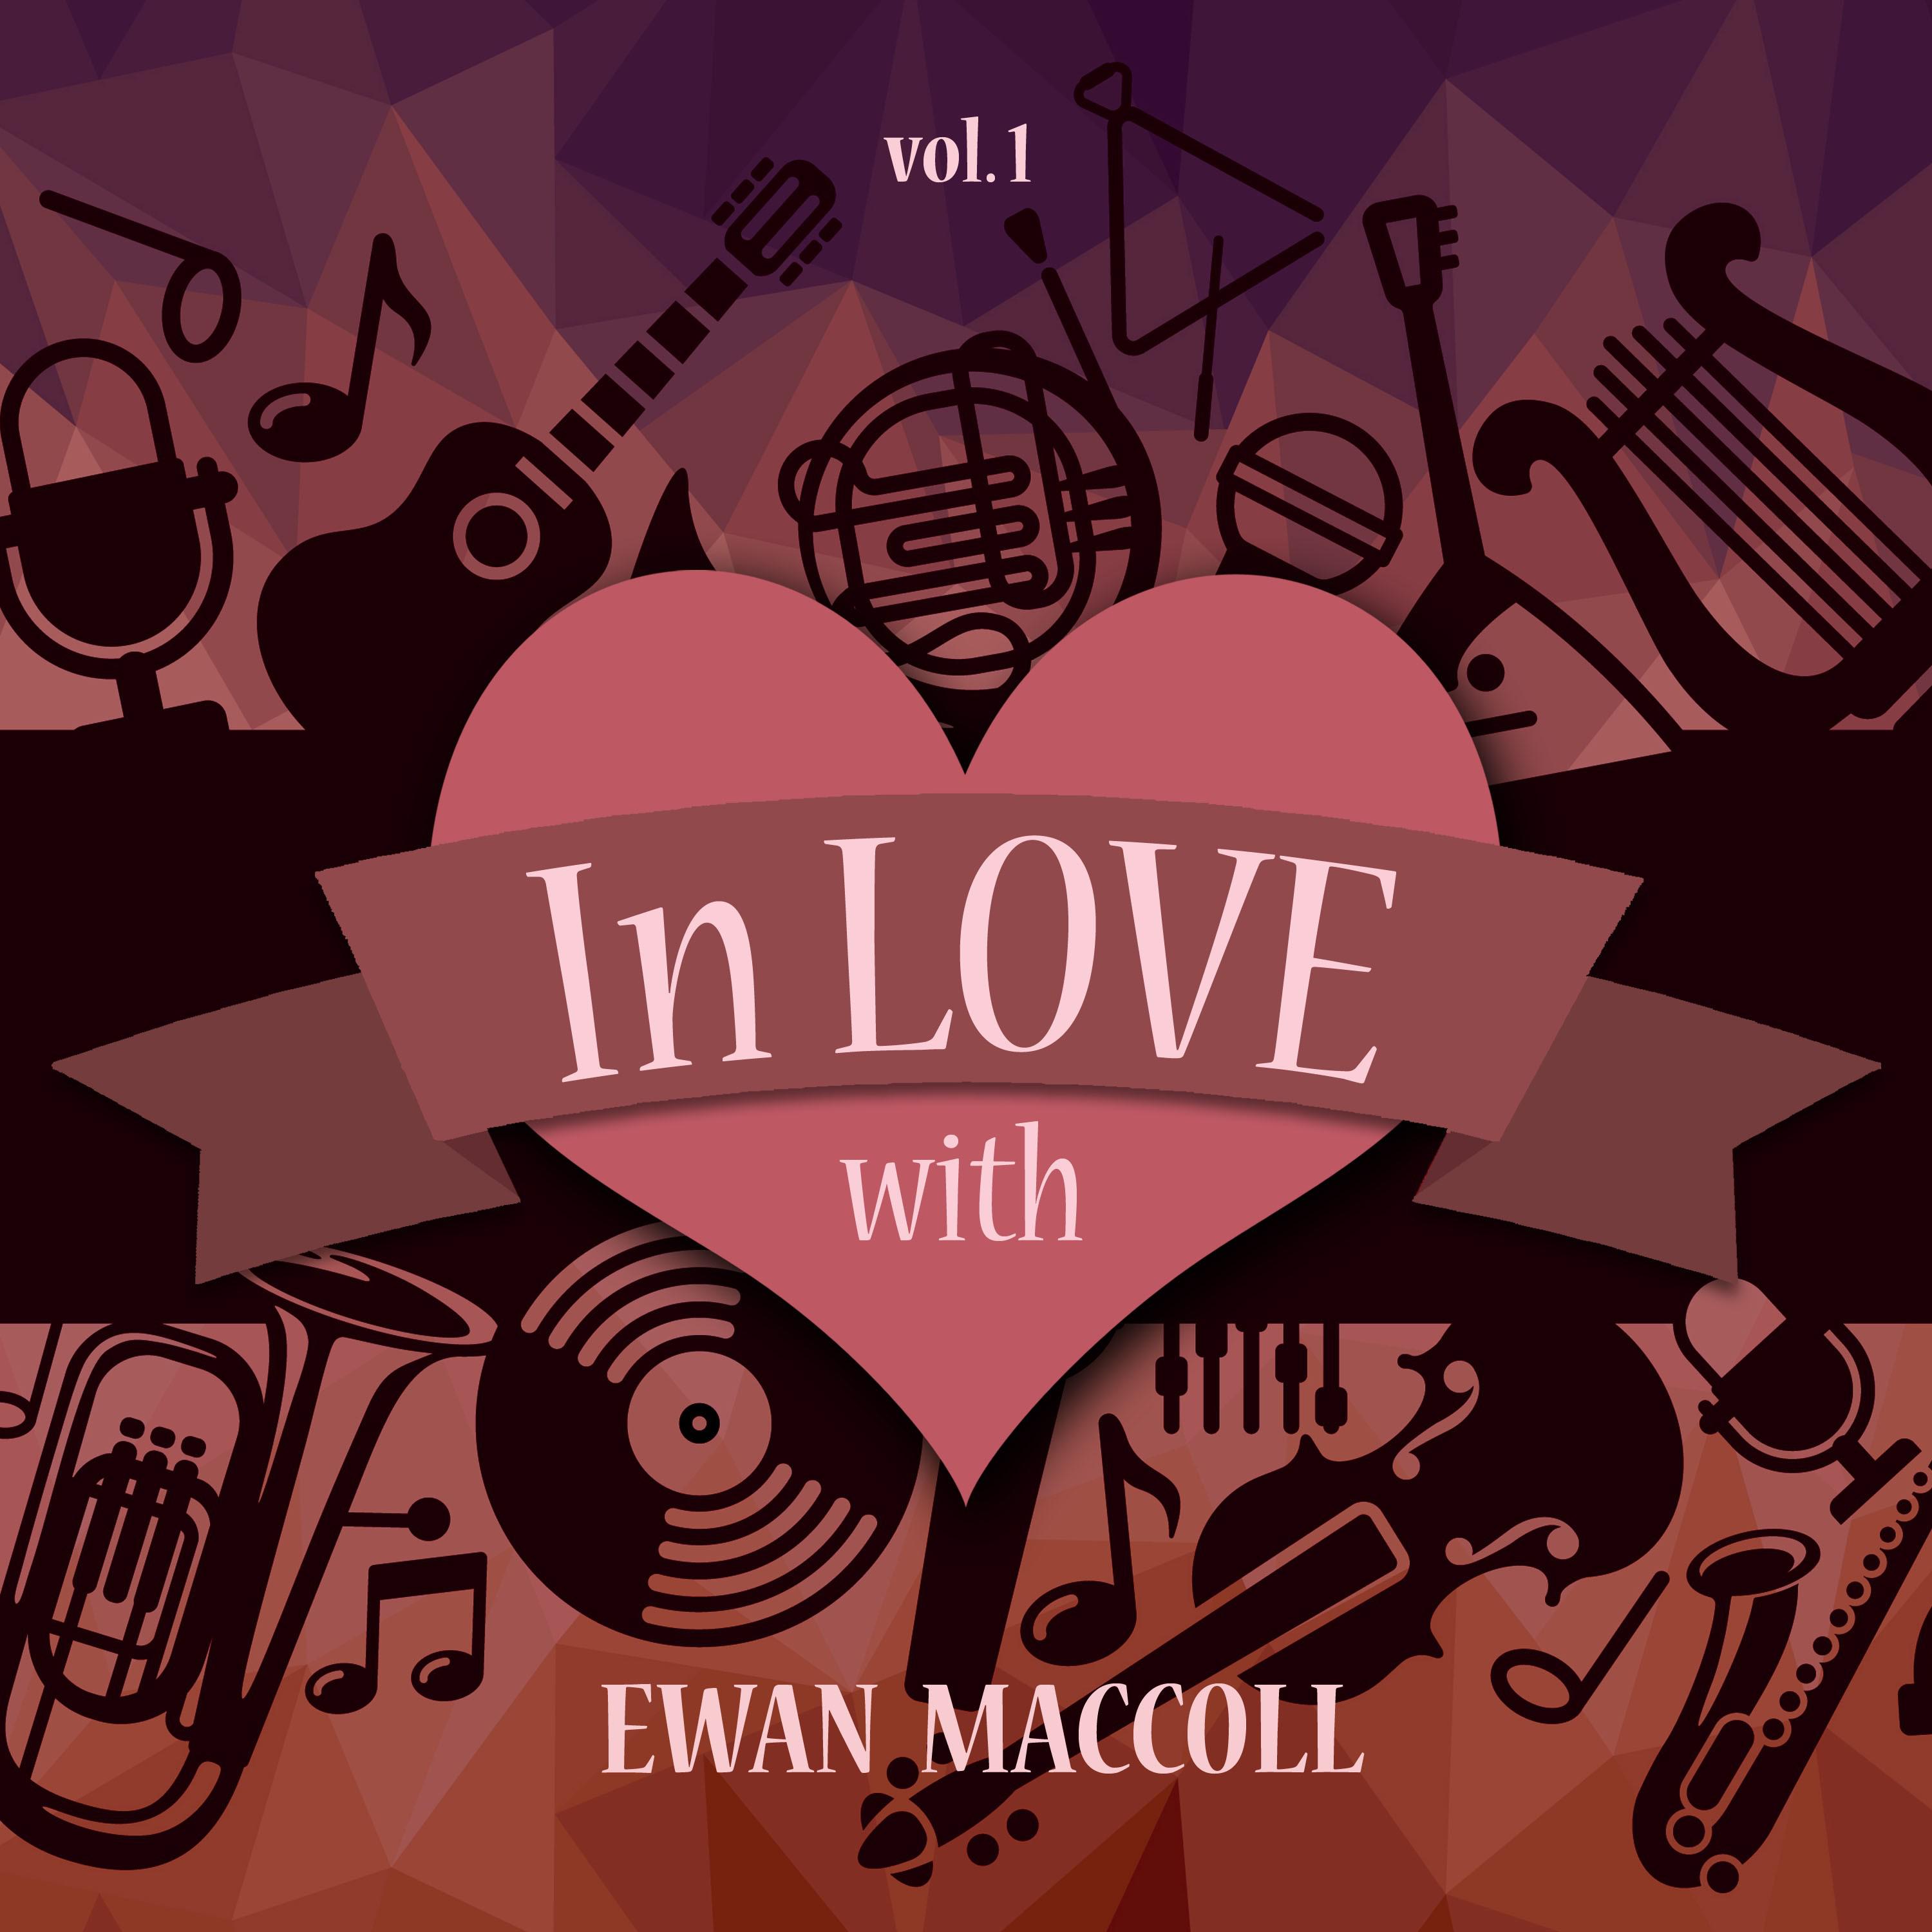 In Love with Ewan Maccoll, Vol. 1